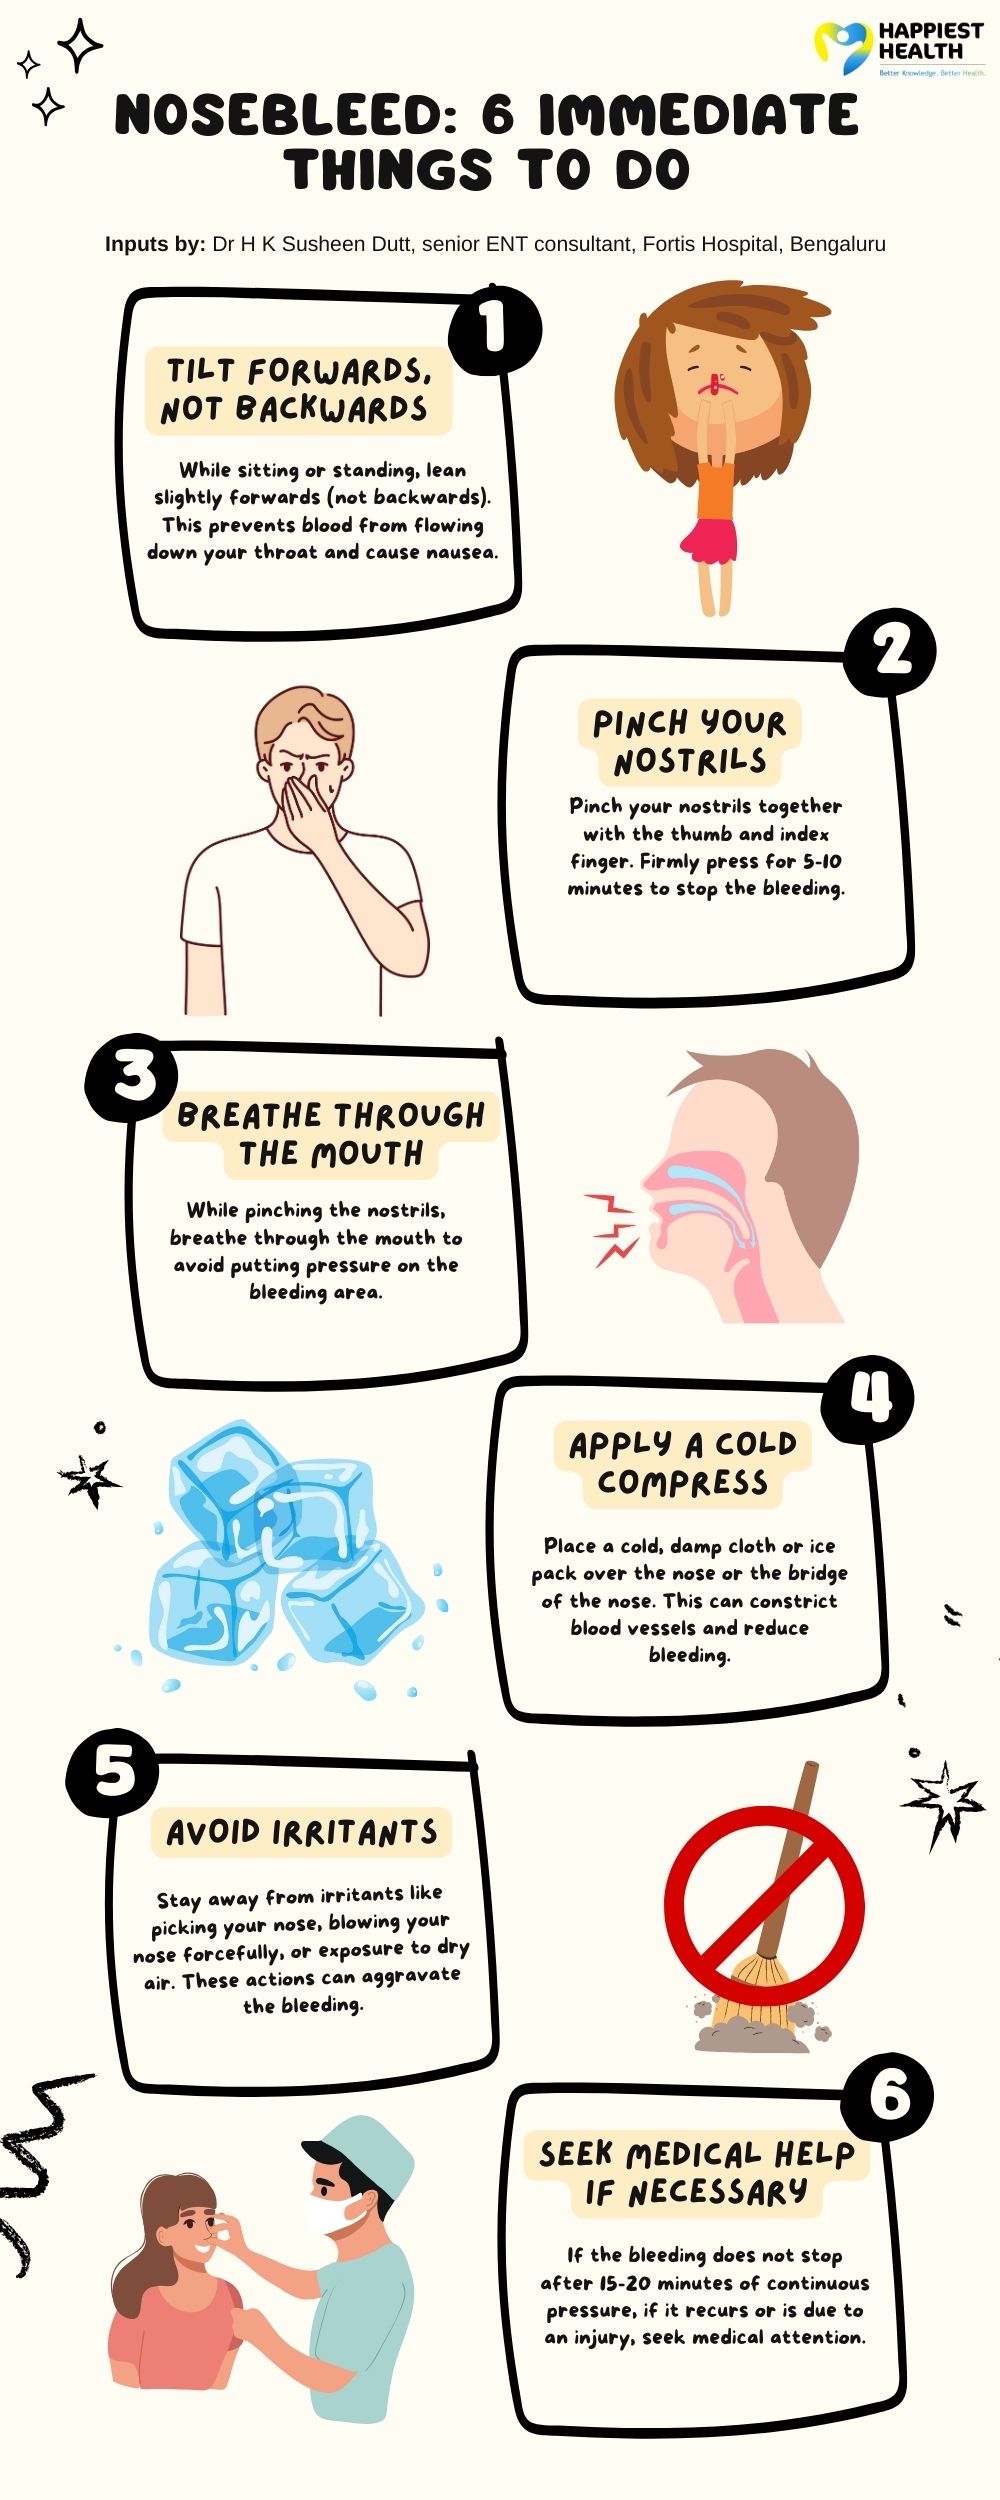 6 immediate steps to take for nosebleed